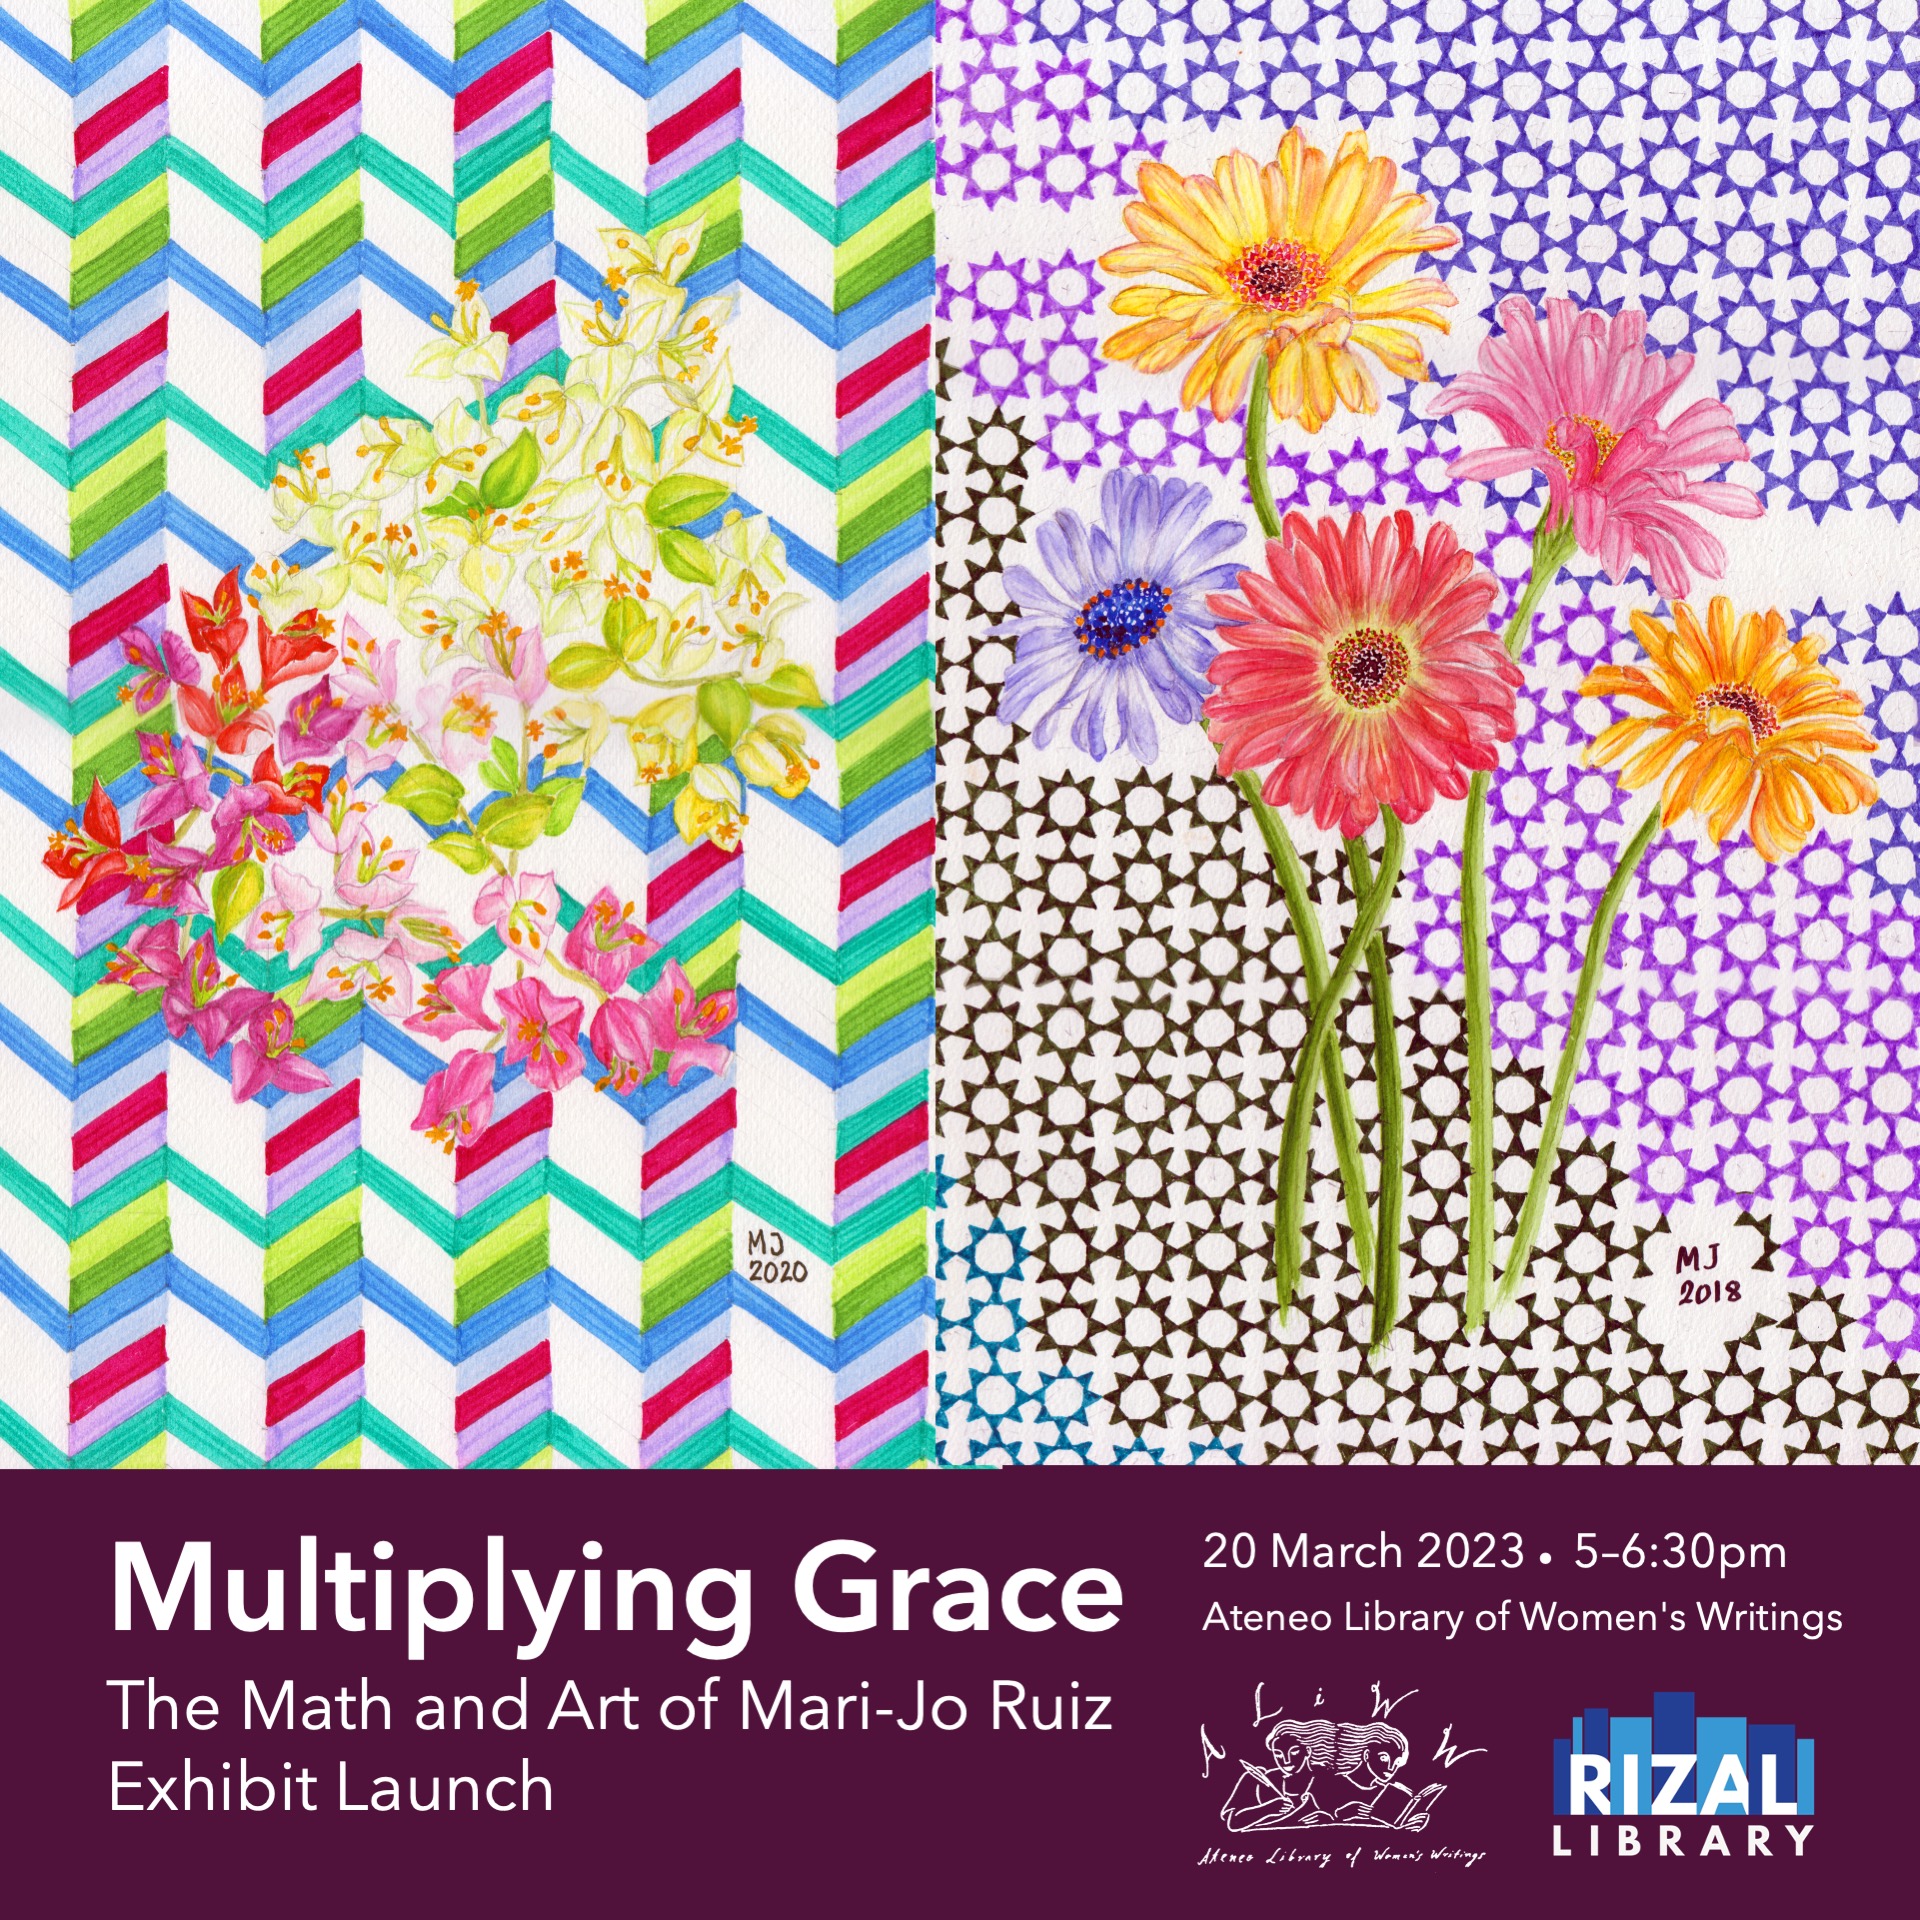 Invitation for Multiplying Grace: The Math and Art of Mari-Jo Ruiz